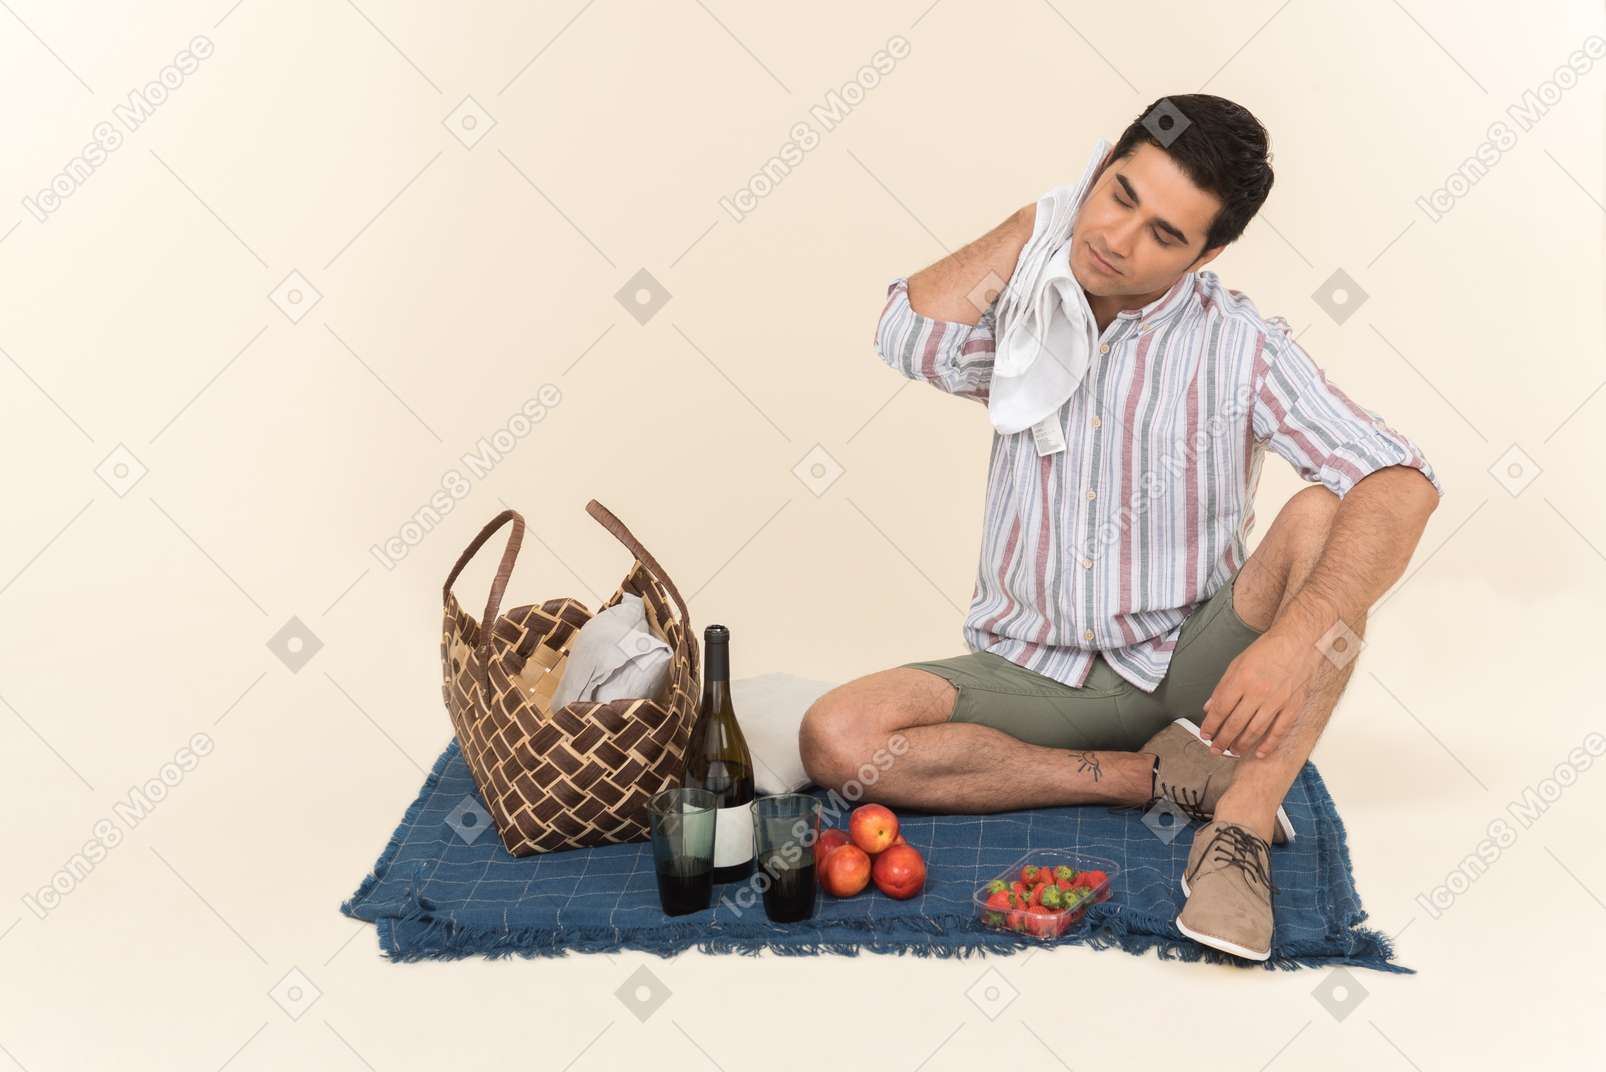 Молодой кавказский человек сидит на одеяле и сушит шею полотенцем